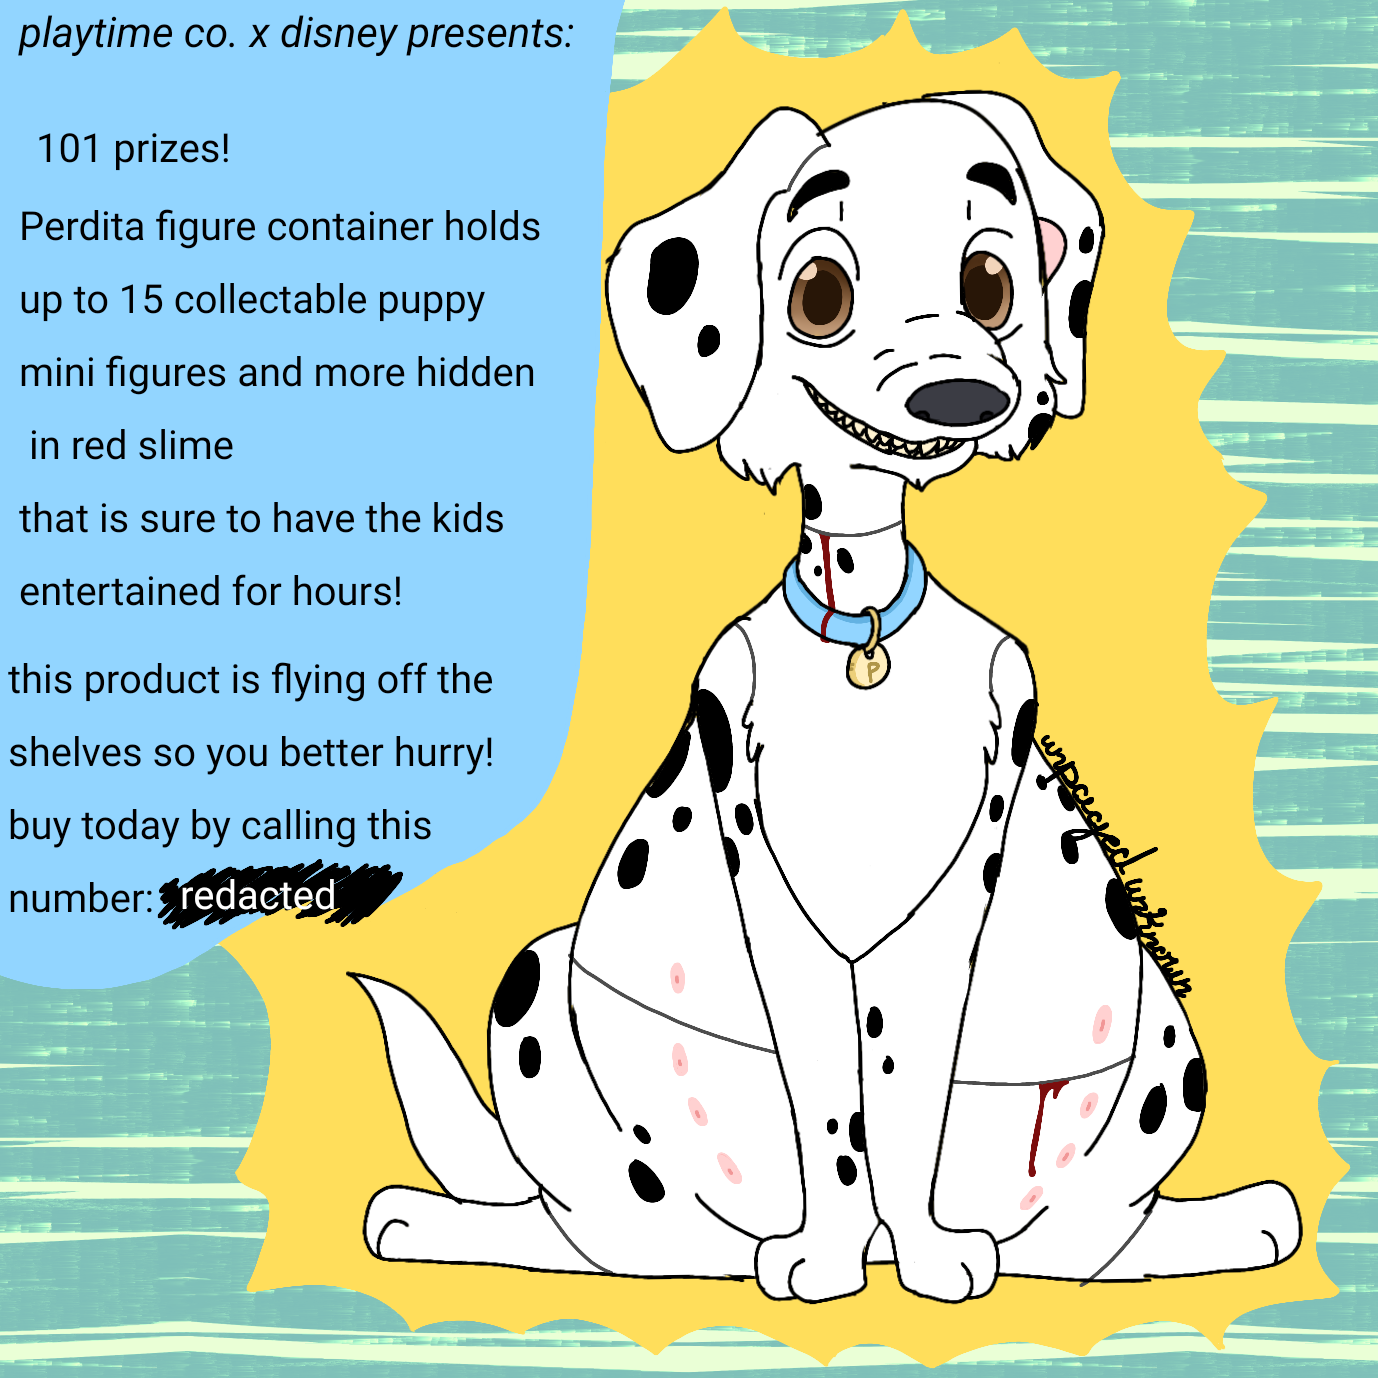 Perdita toy by playtime co. by UnpagedUnknown -- Fur Affinity [dot] net